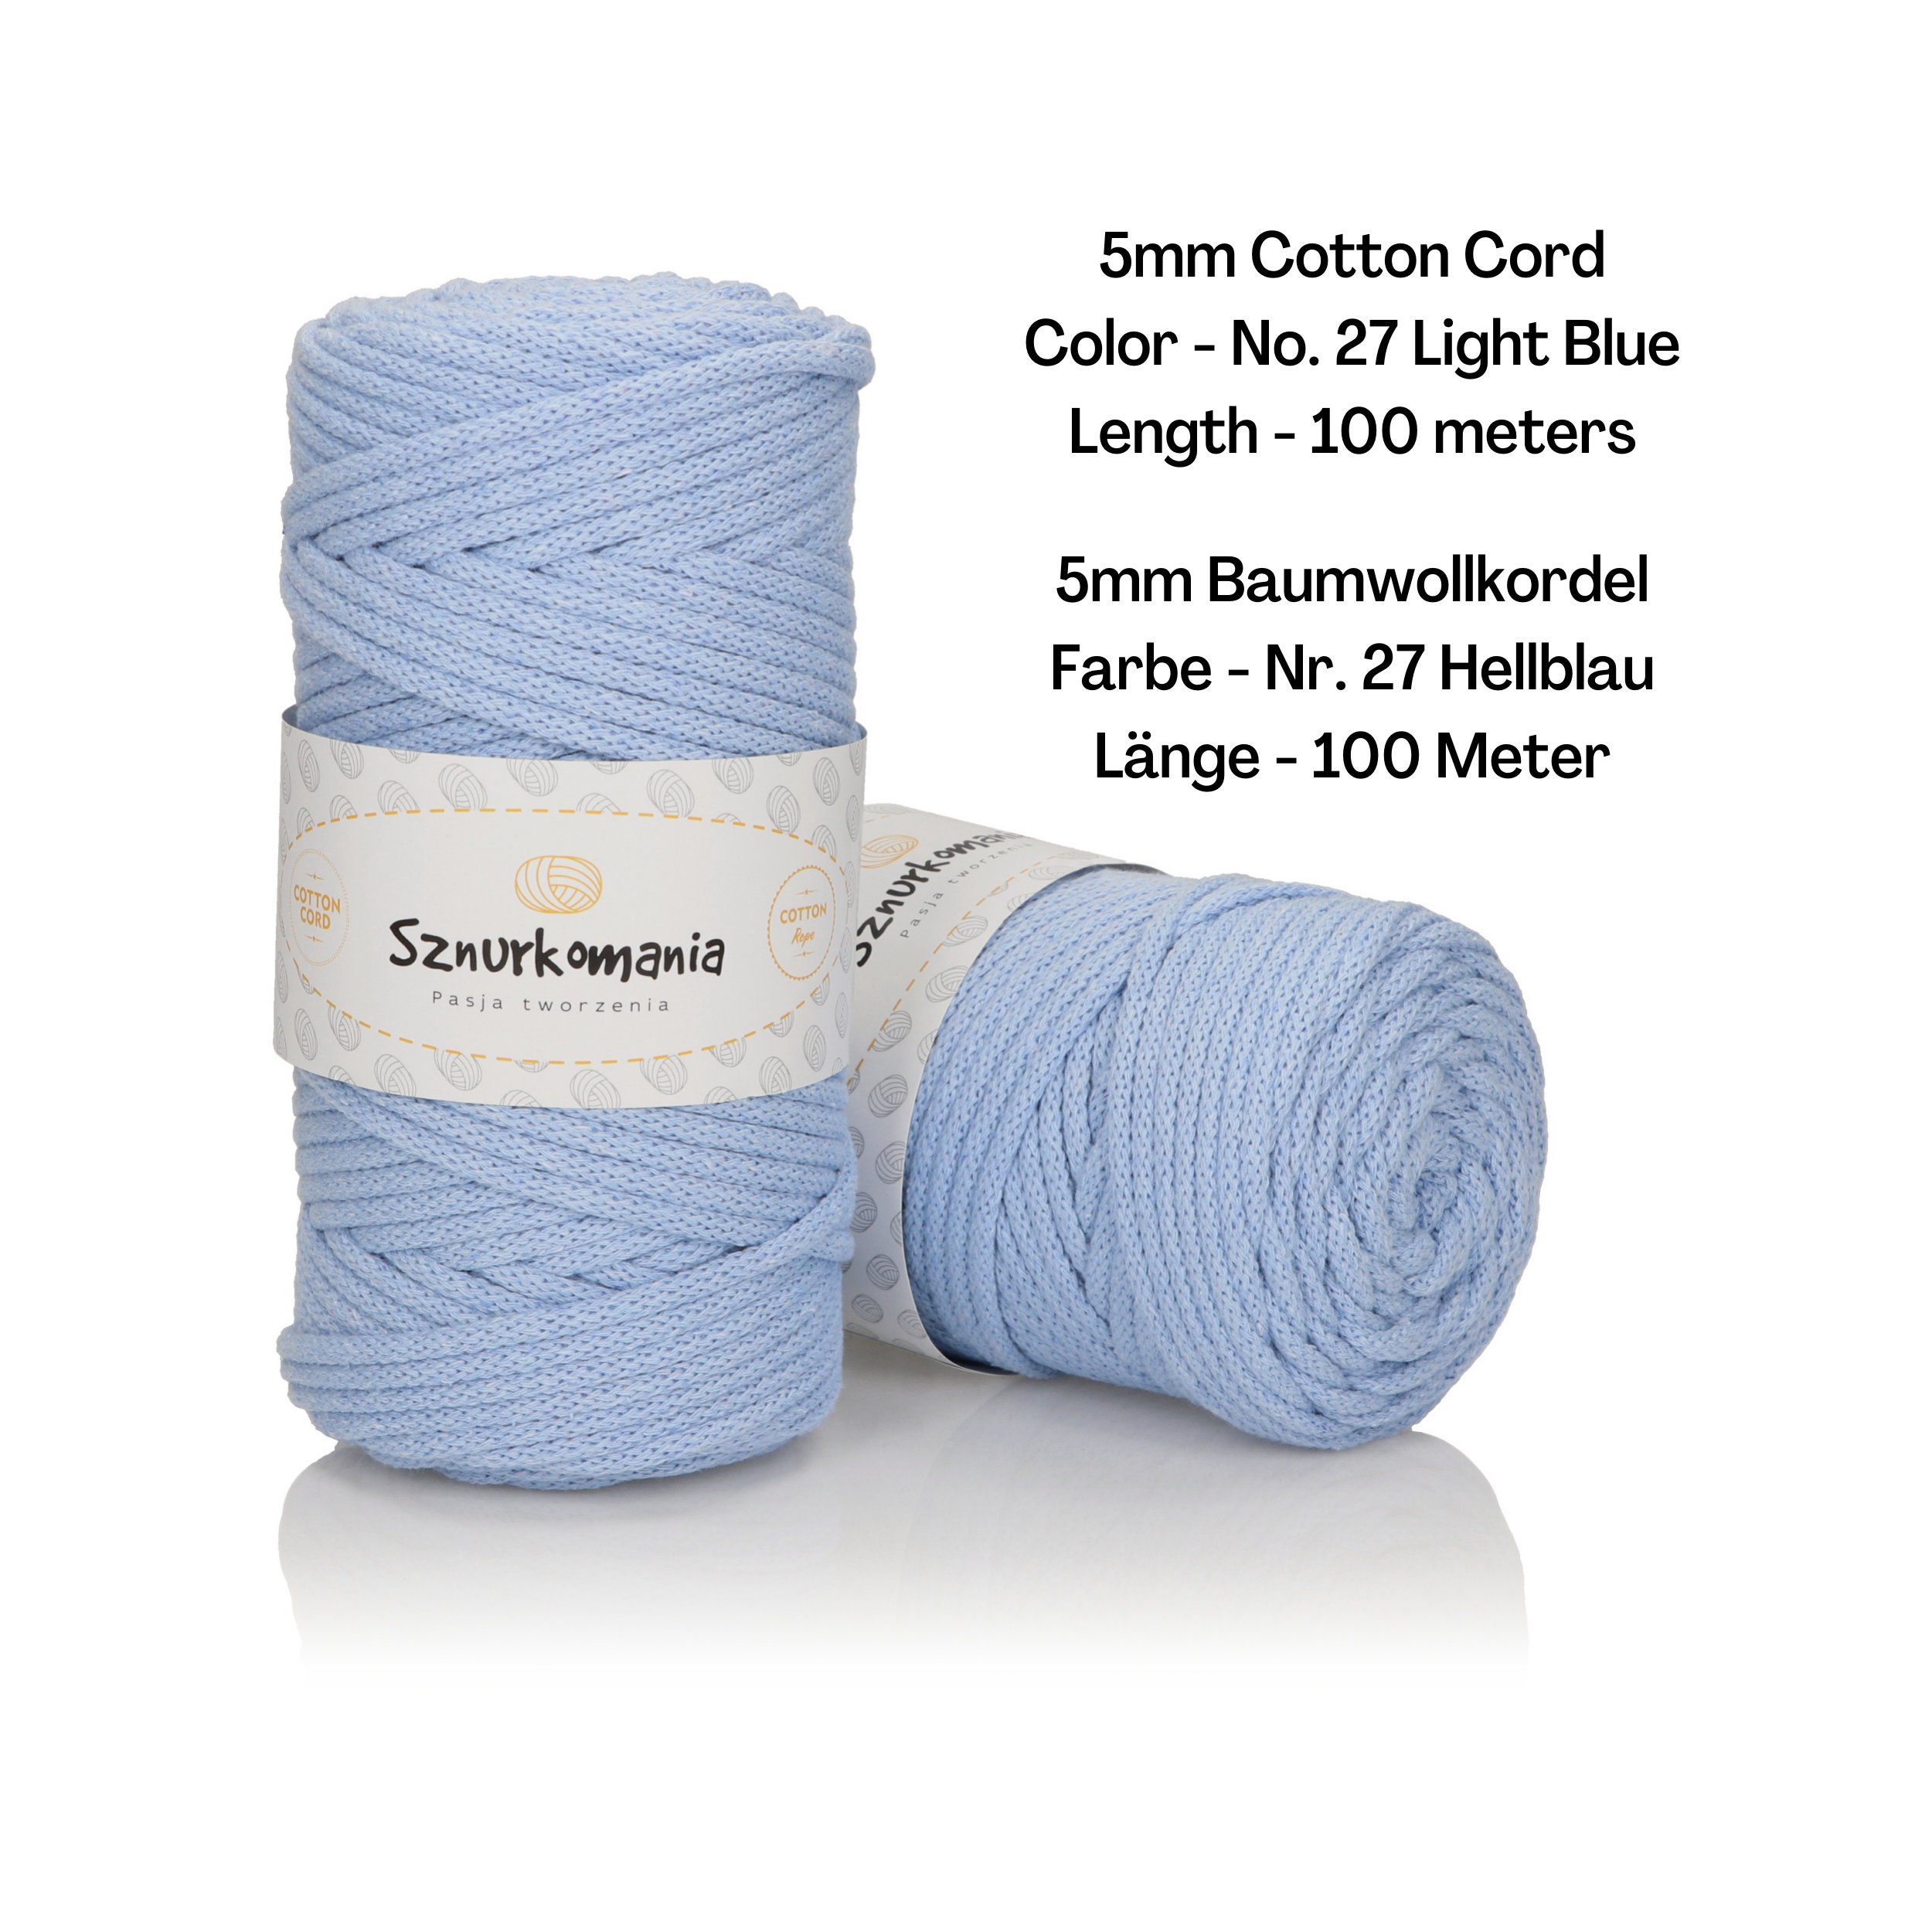 6mm Black Crochet Cord 25yds, Cotton Braided Cord, Craft Making